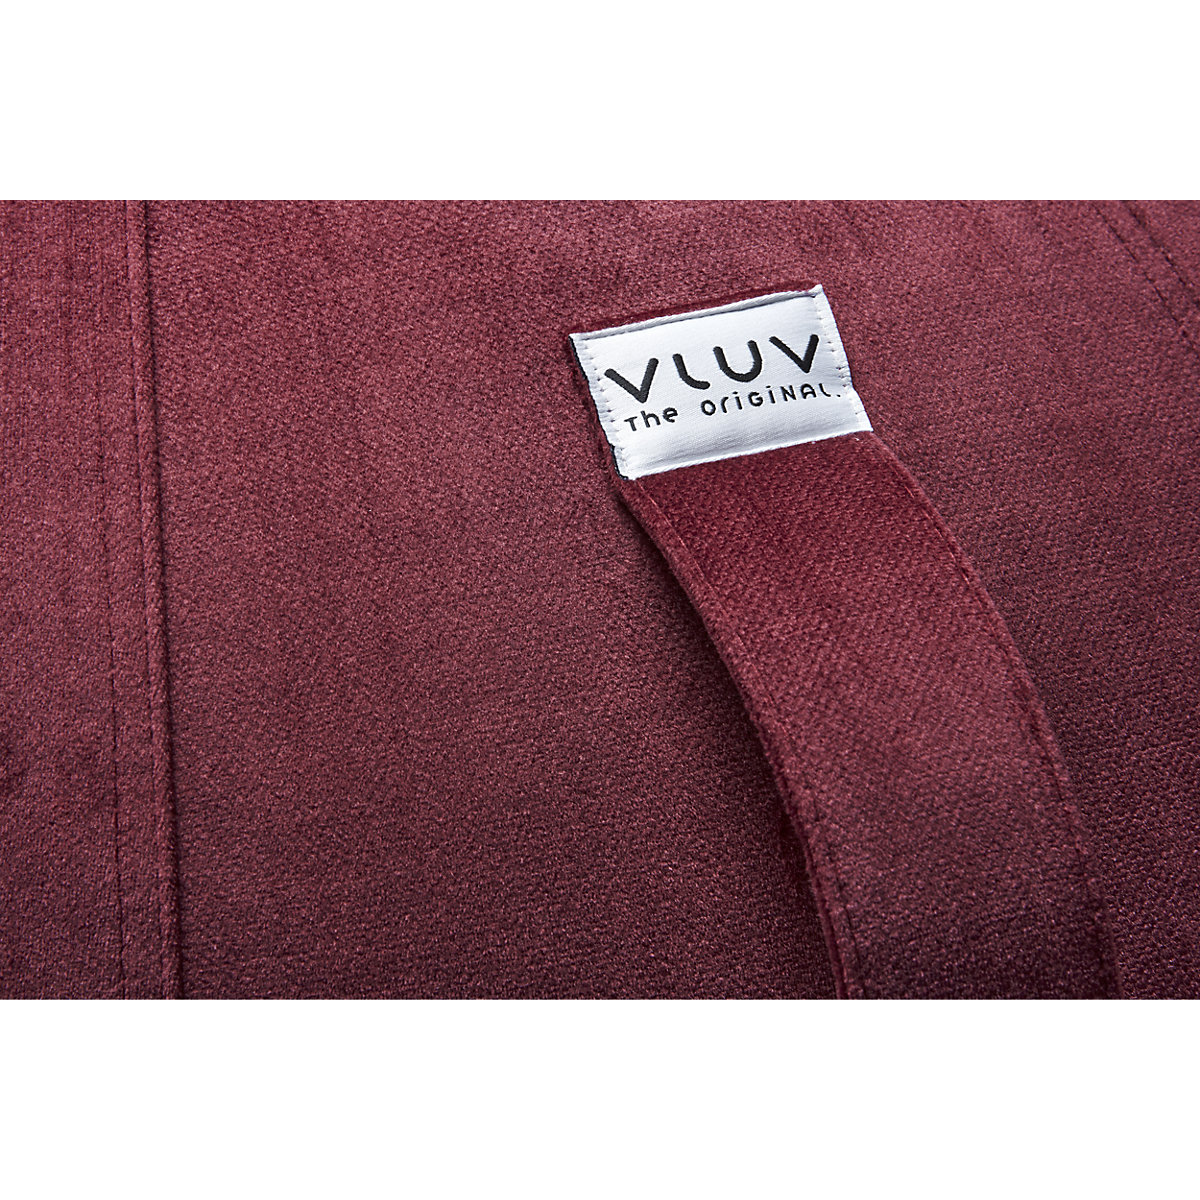 Piłka do siedzenia VARM – VLUV (Zdjęcie produktu 18)-17